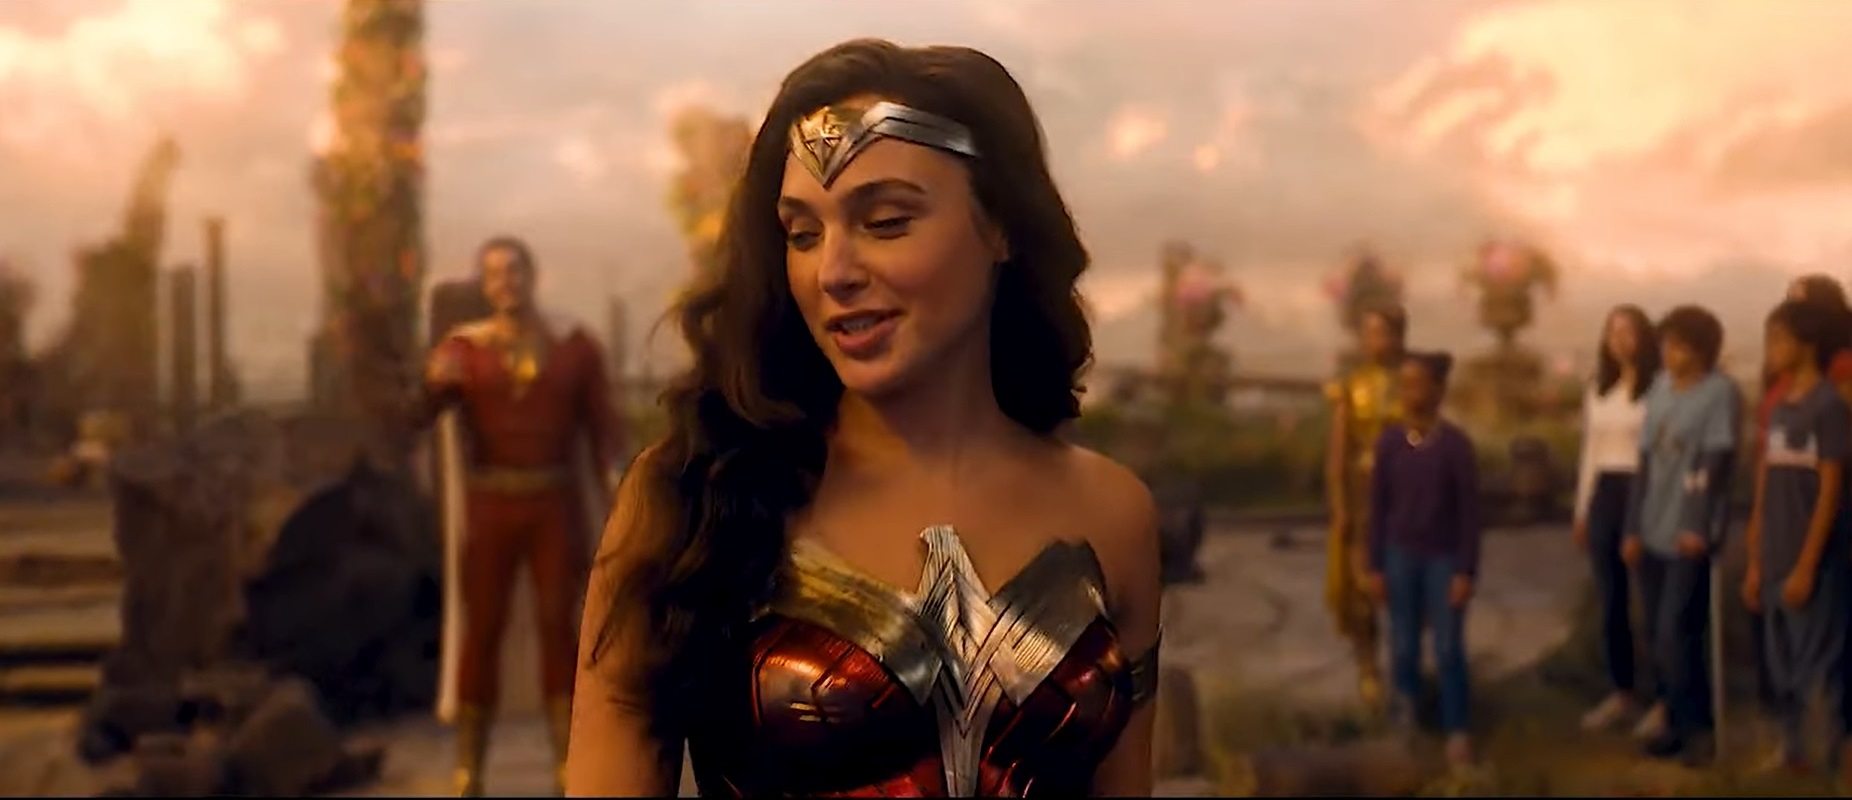 ¿Vuelve Diana? Gal Gadot dijo que desarrollara Wonder Woman 3 en el DCU junto a James Gunn y Peter Safran > Cultura Geek %